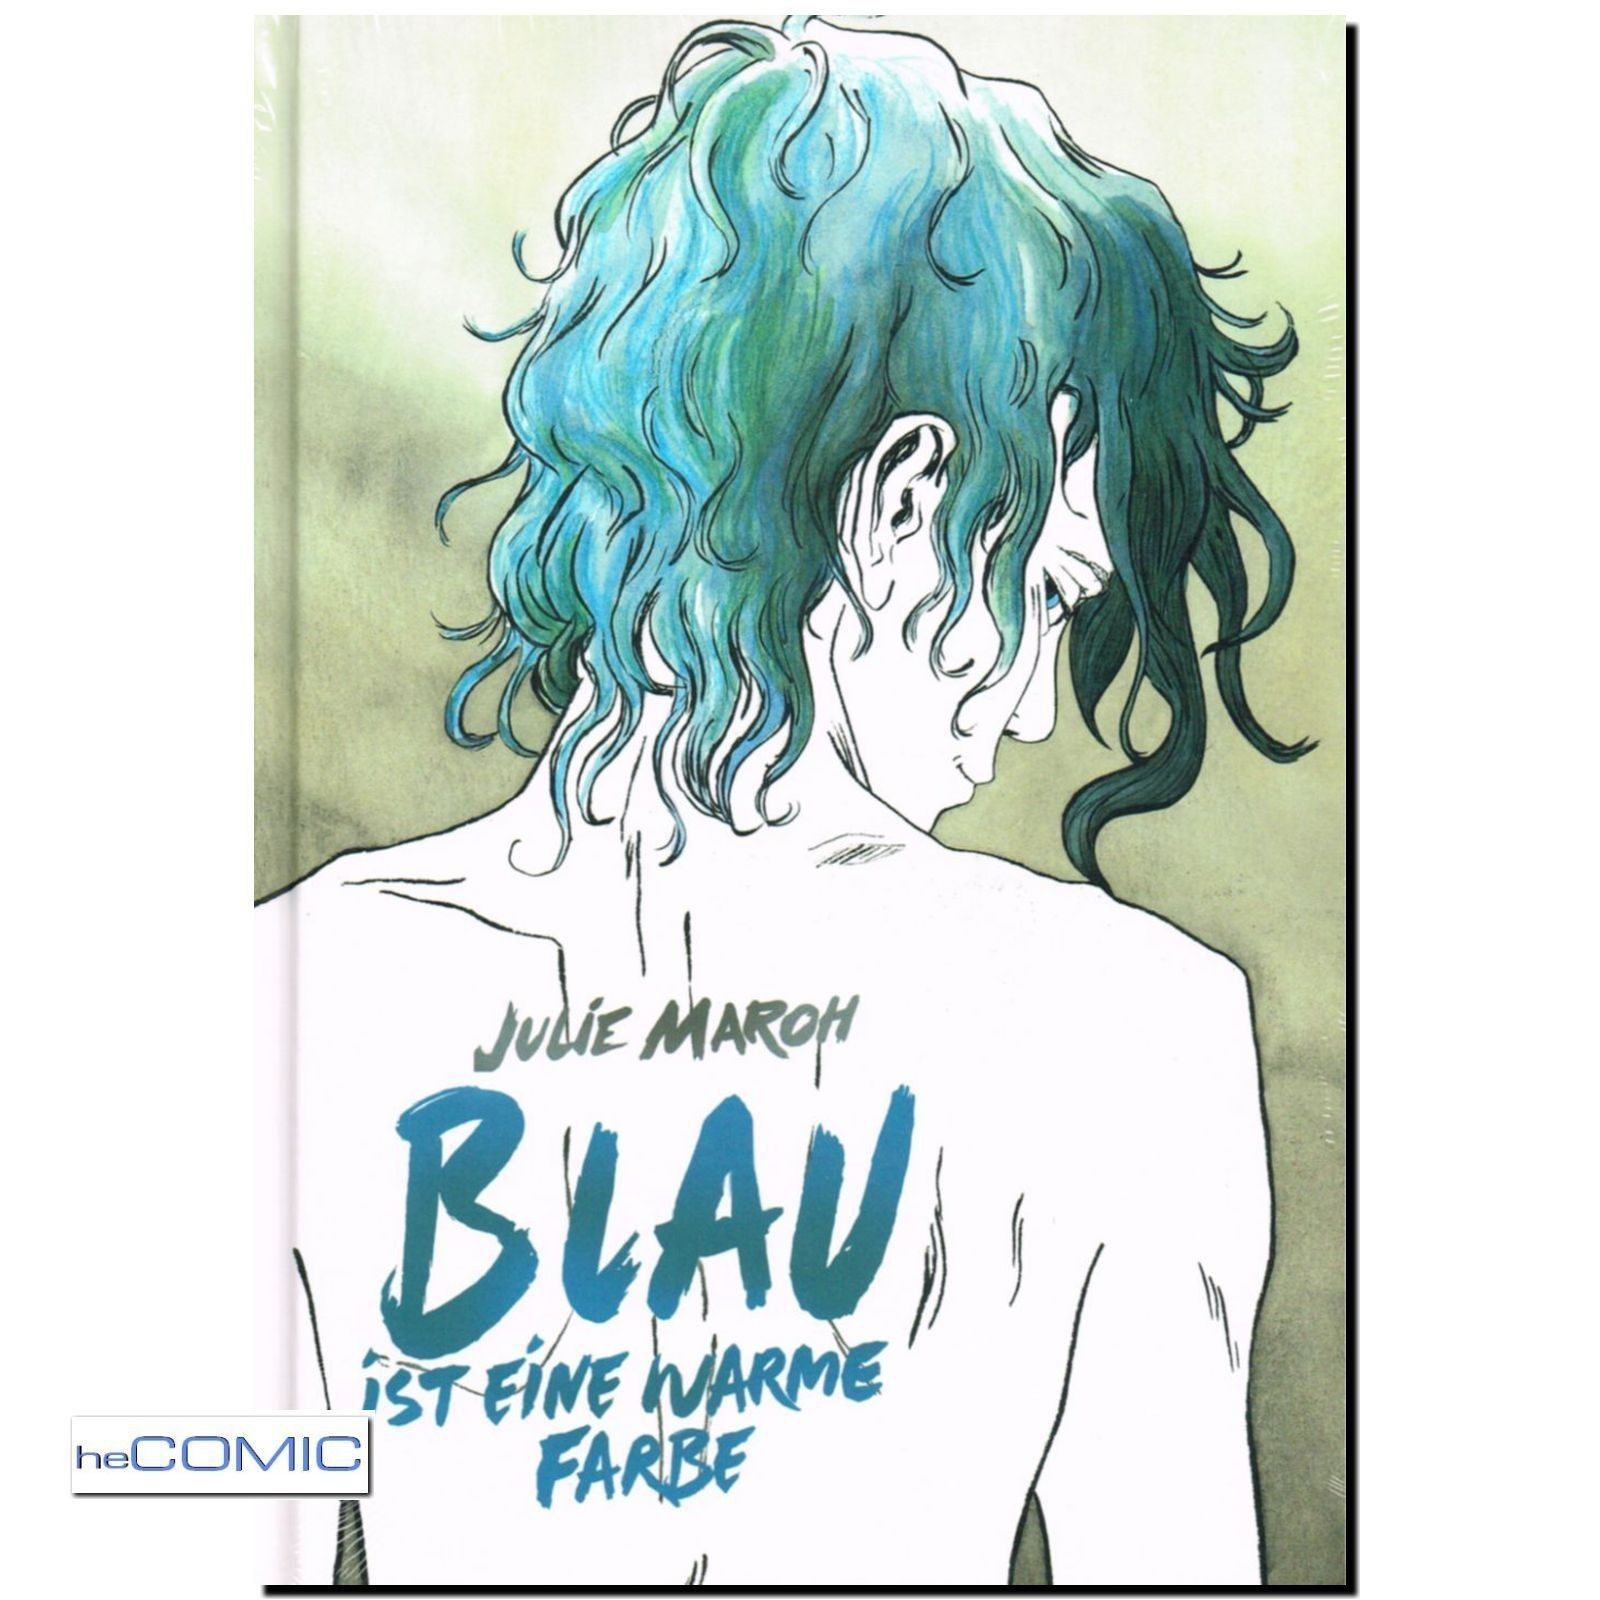 heComic-Novel-Comic-Blau-ist-eine-warme-Farbe-Julie-Maroh-Graphic-Roman